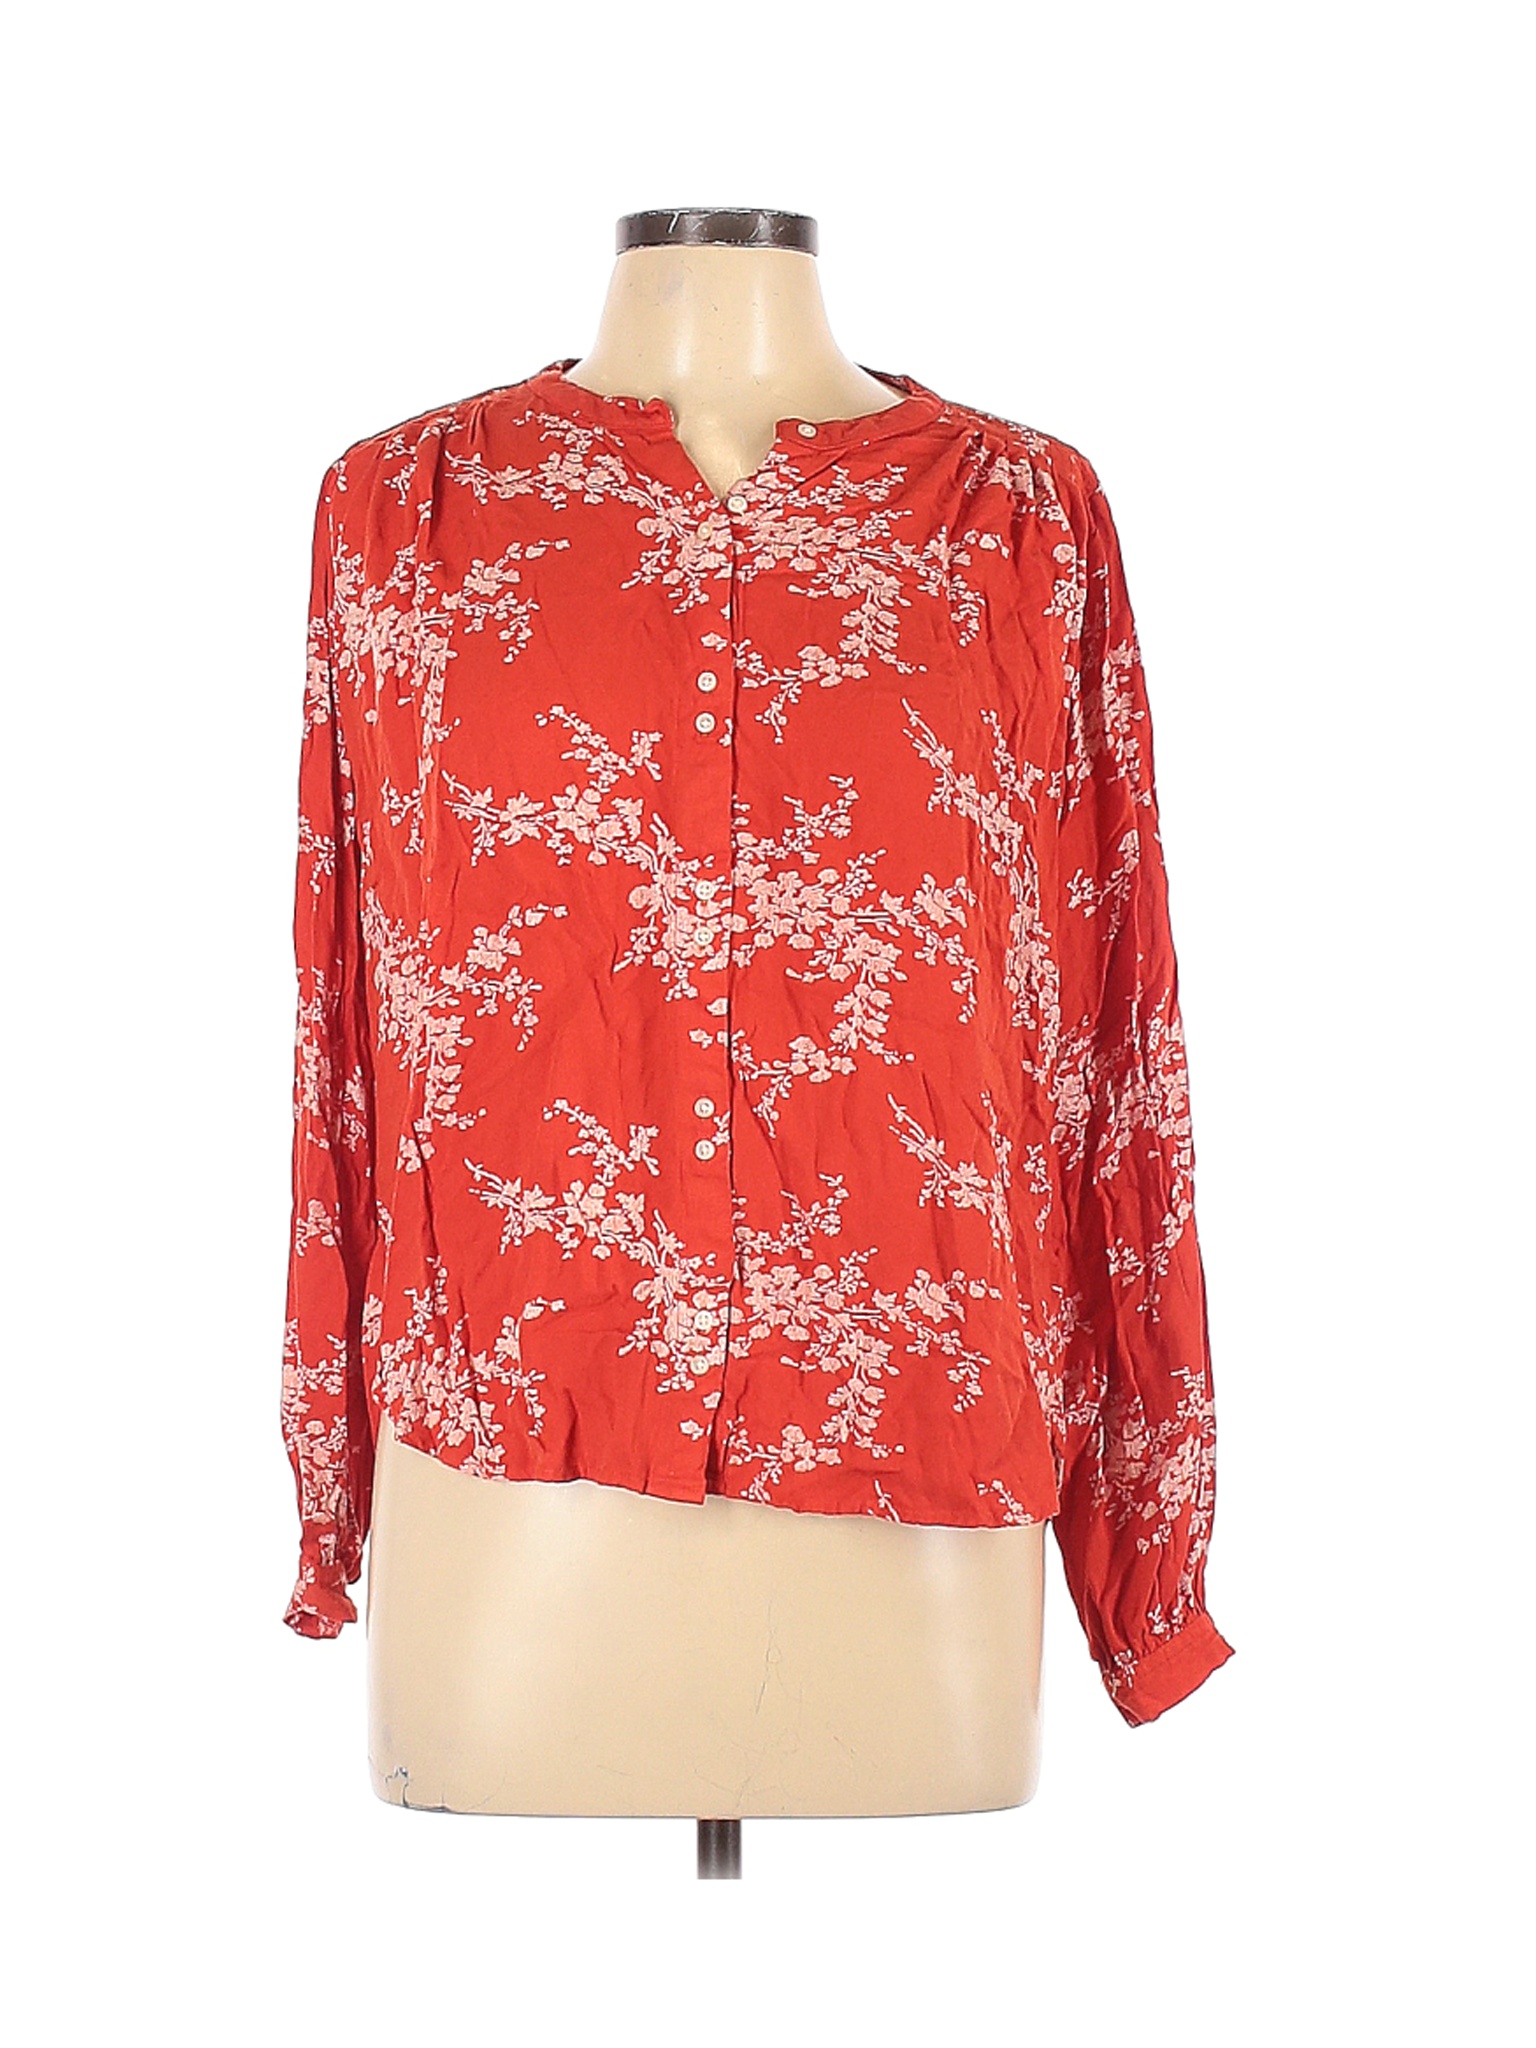 Gap Women Orange Long Sleeve Button-Down Shirt L | eBay